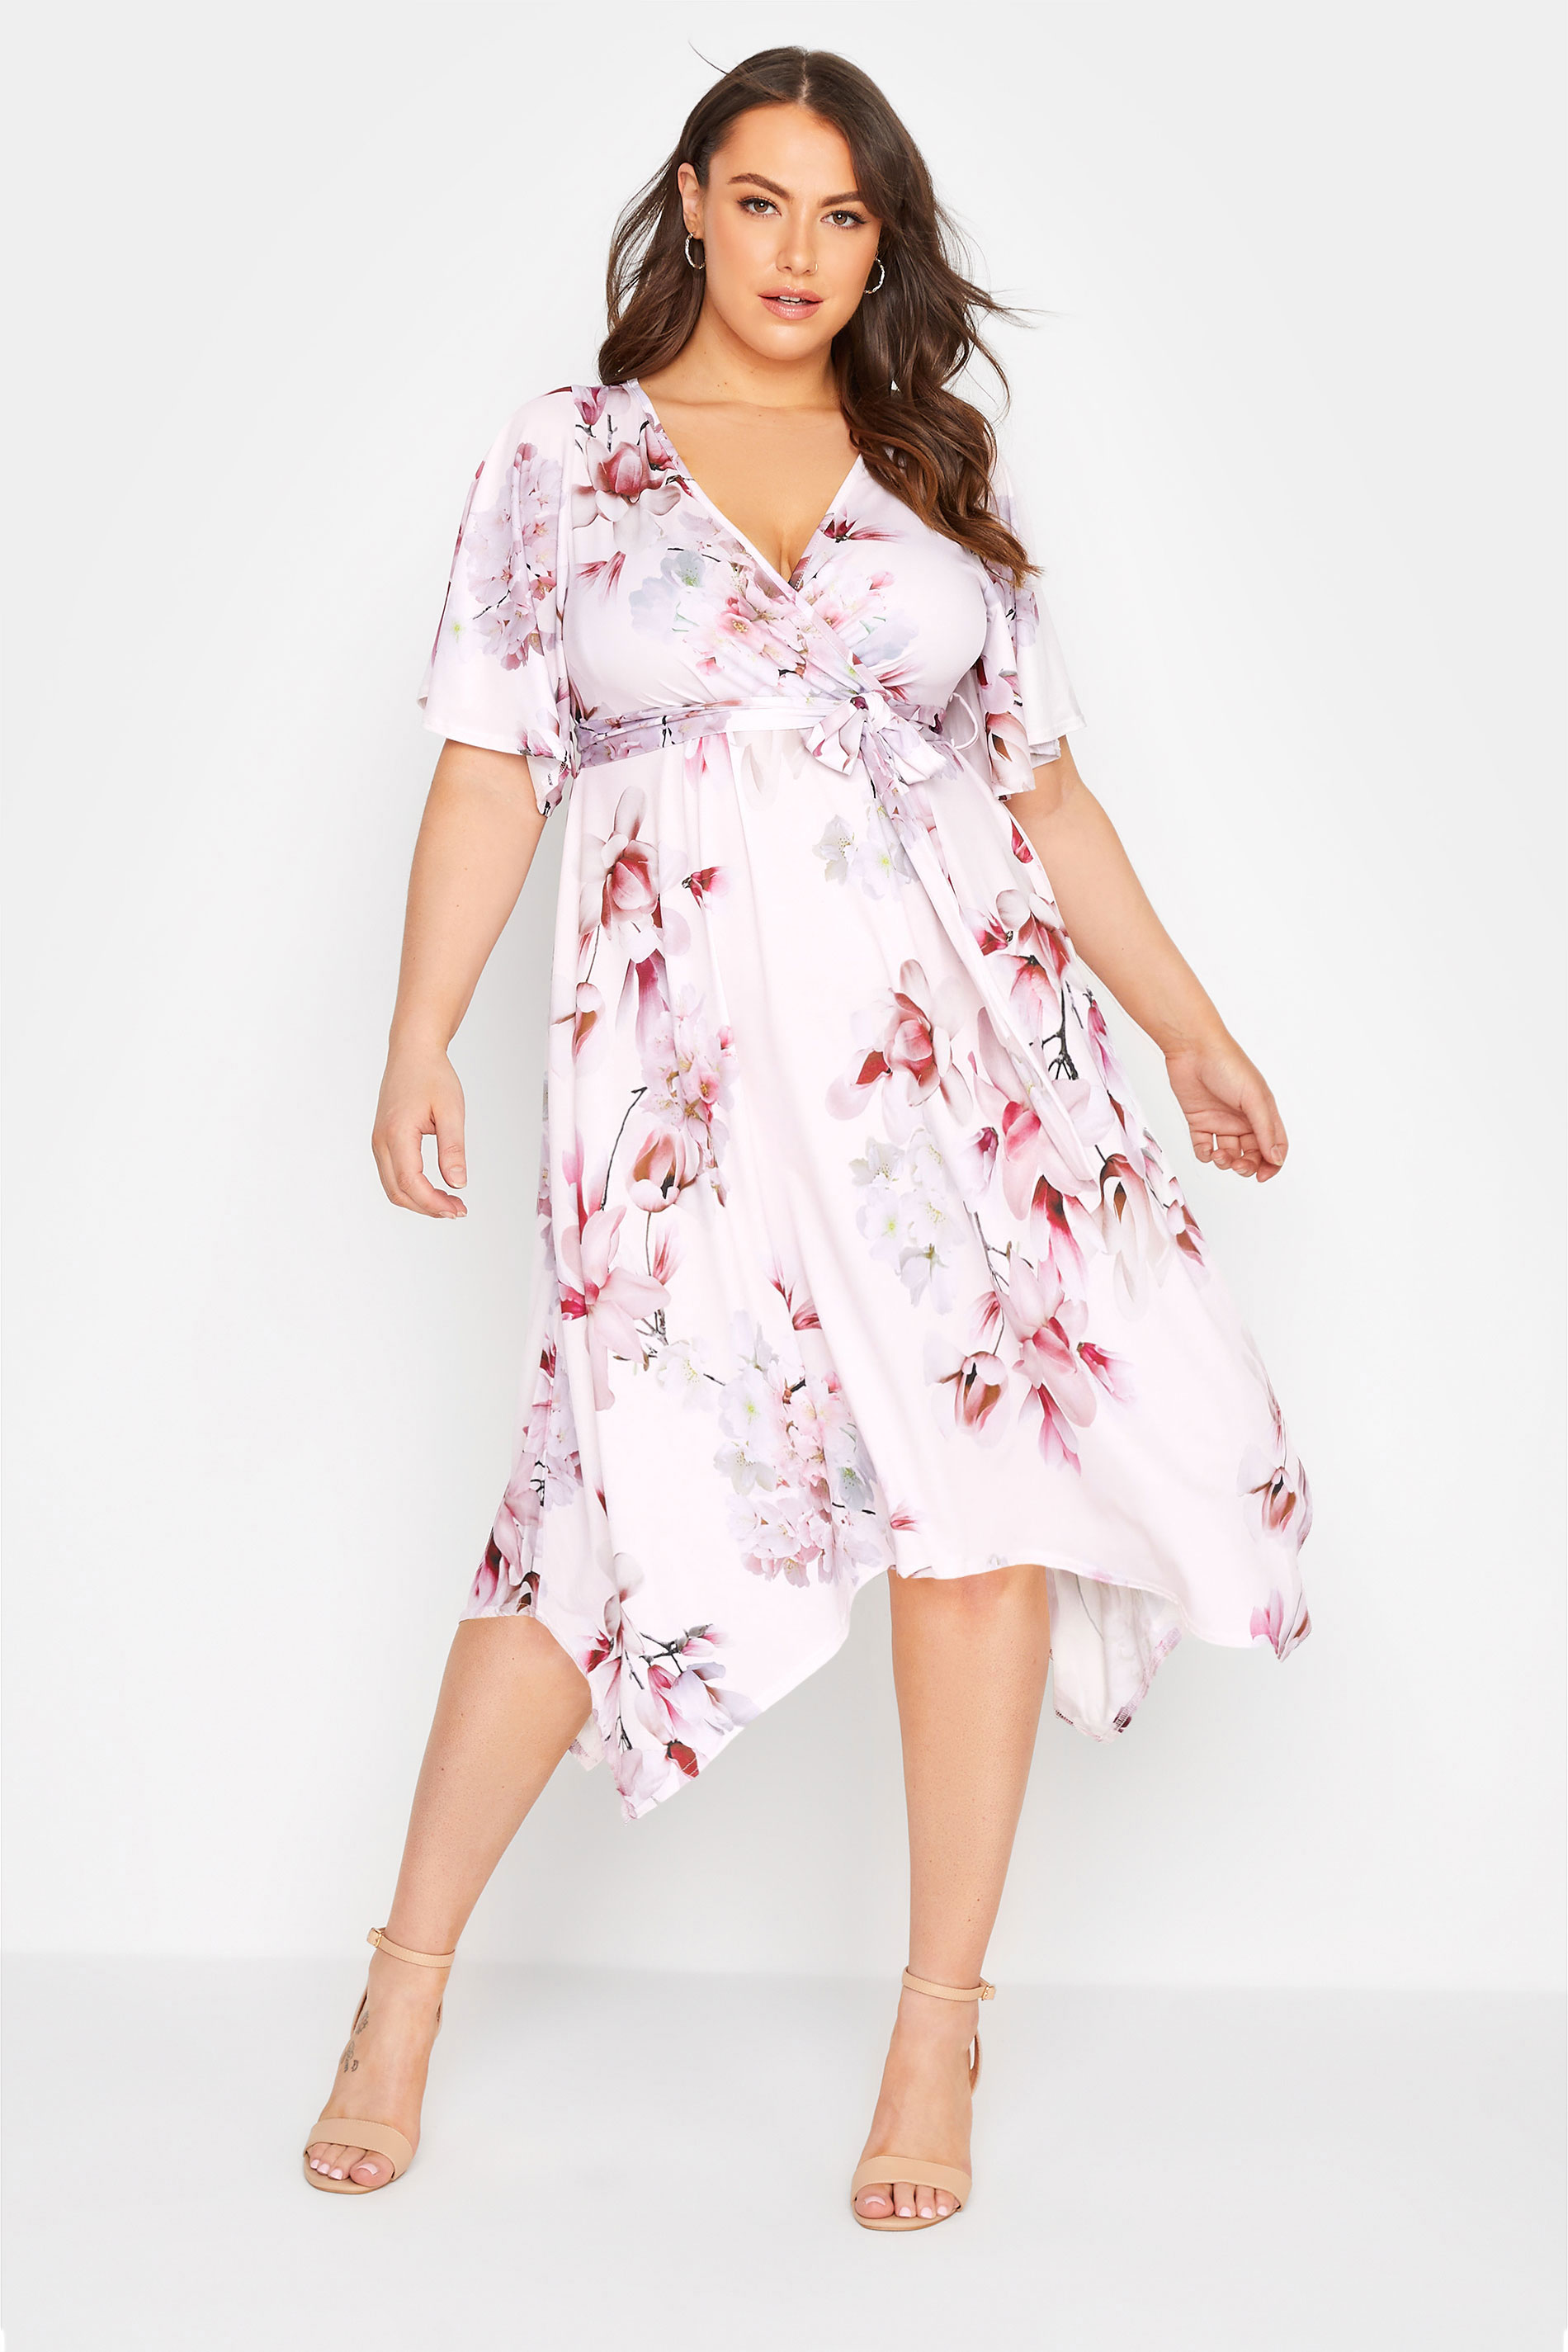 Robes Grande Taille Grande taille  Robes Imprimé Floral | YOURS LONDON - Robe Rose Pâle Floral Design Portefeuille - BW52348